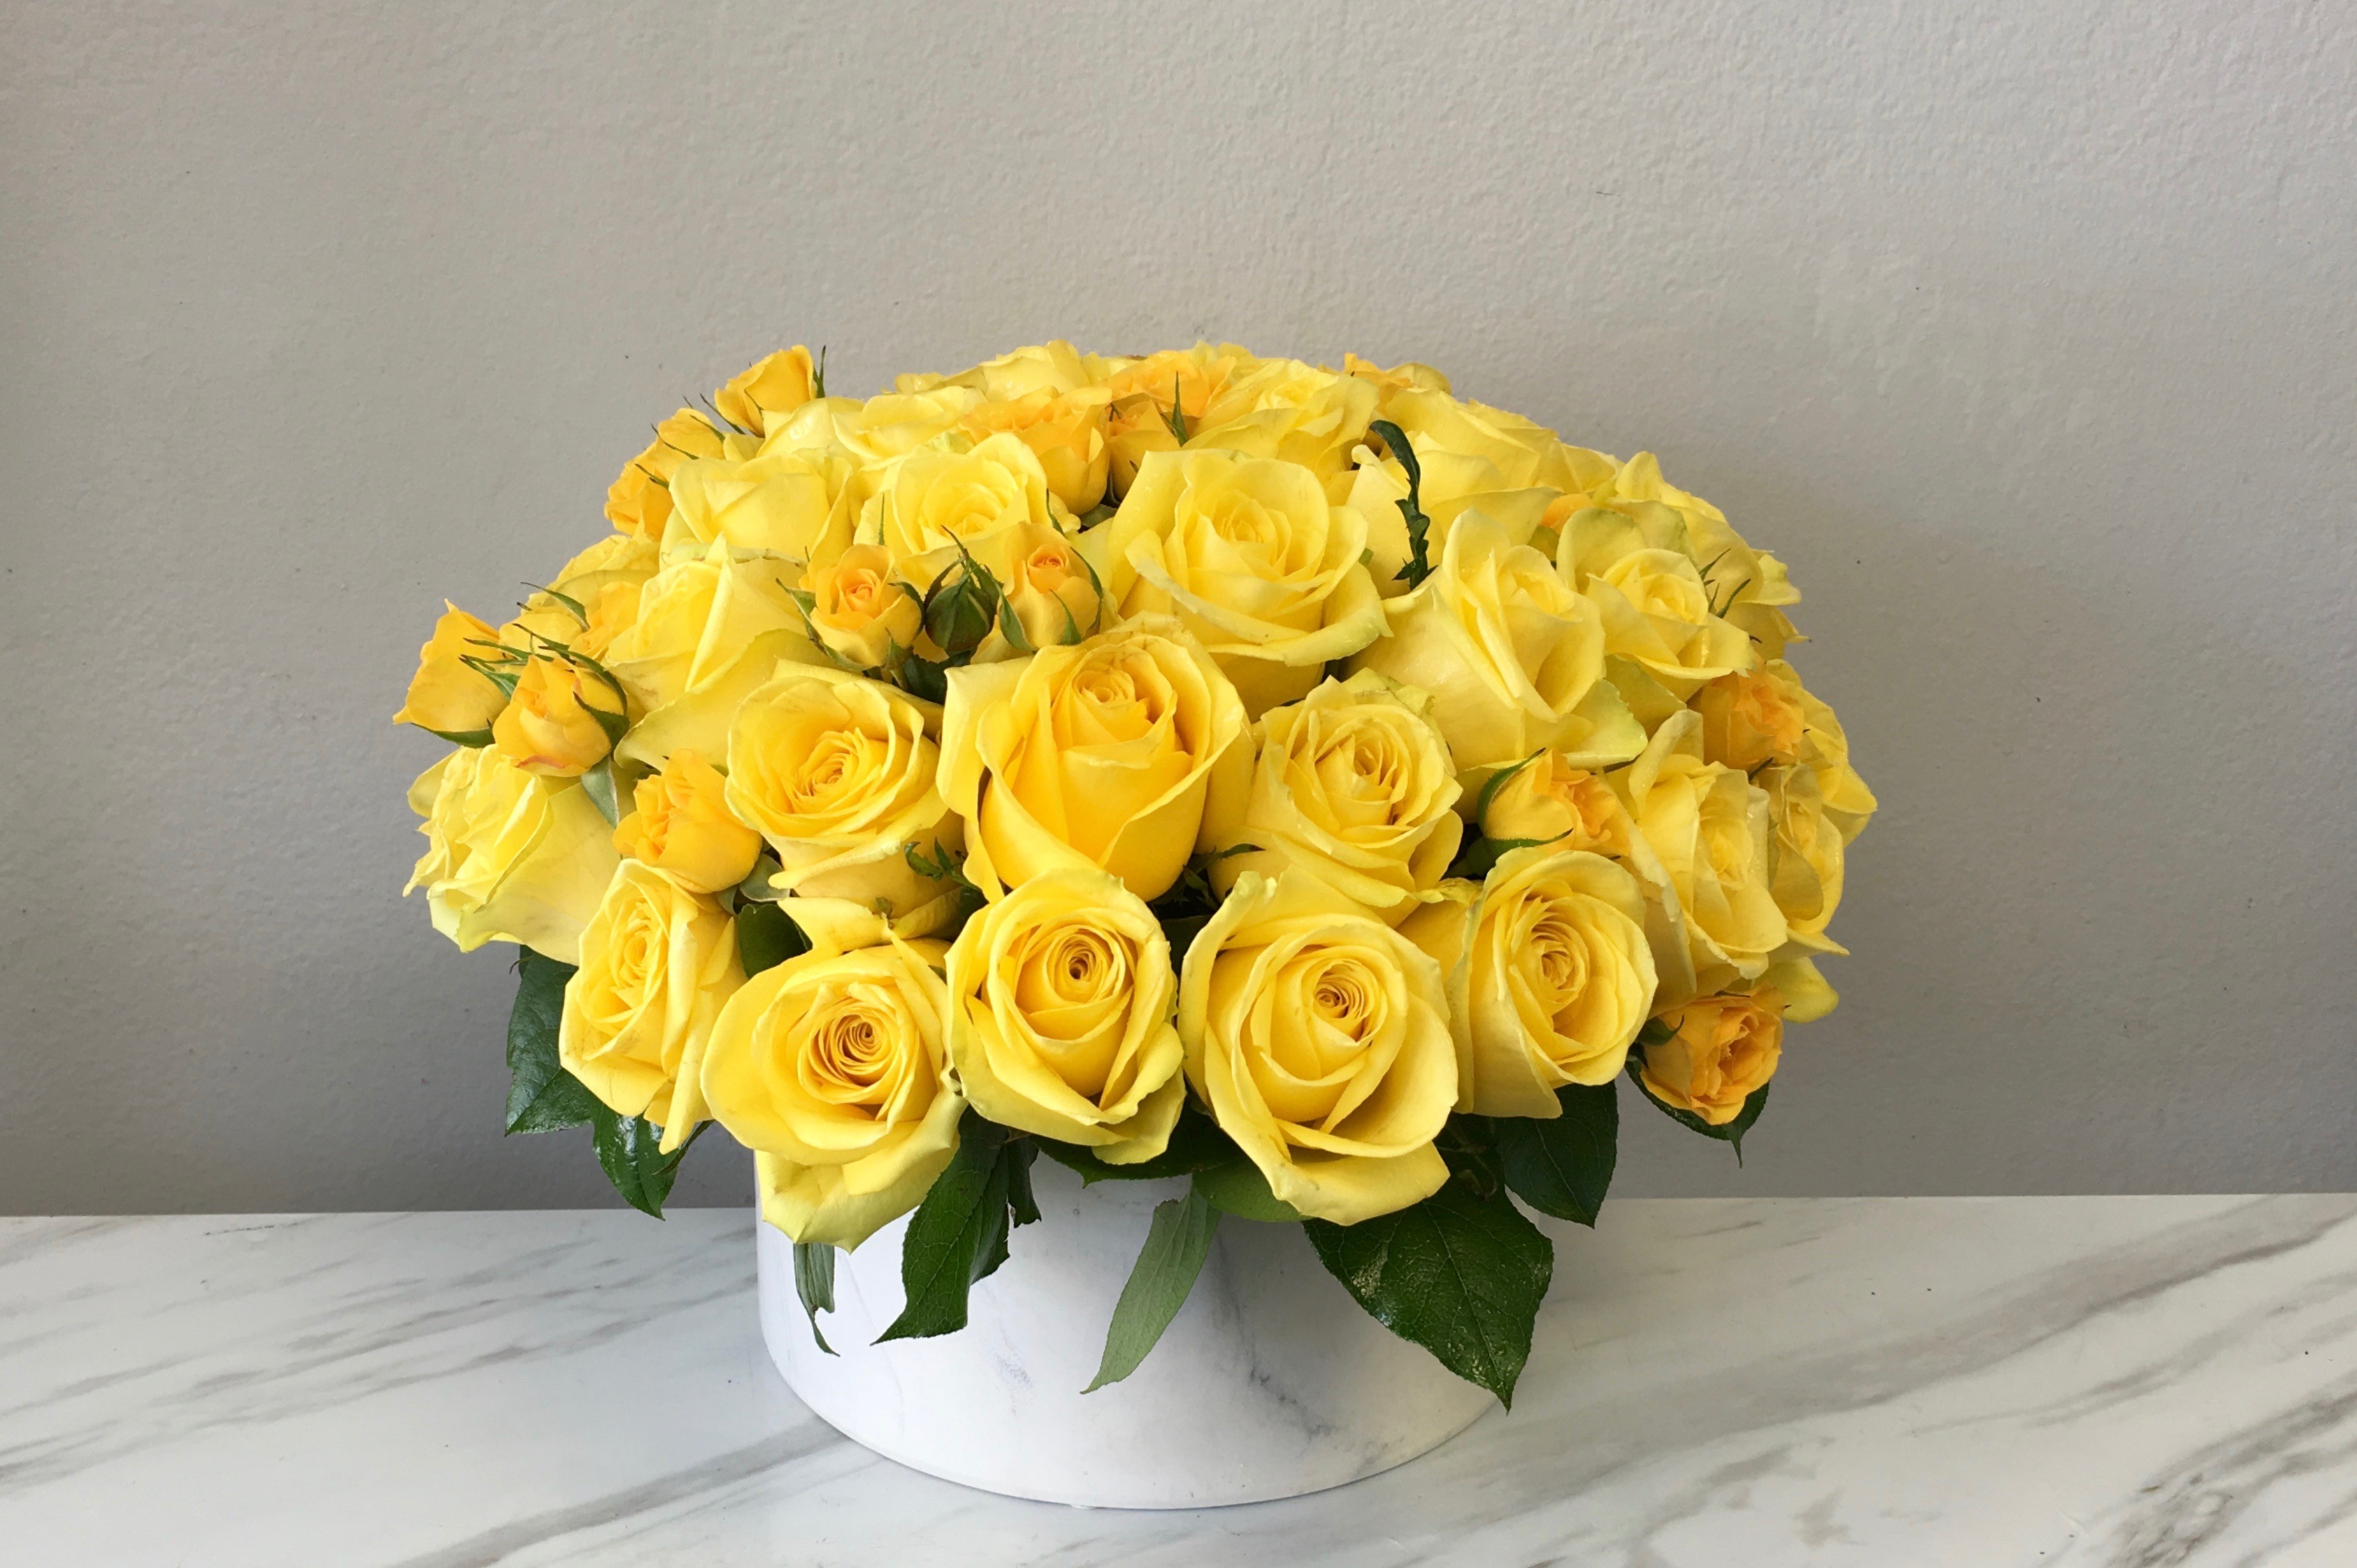 Bright Yellow Roses - Glendale Florist in Glendale, CA | Glendale ...